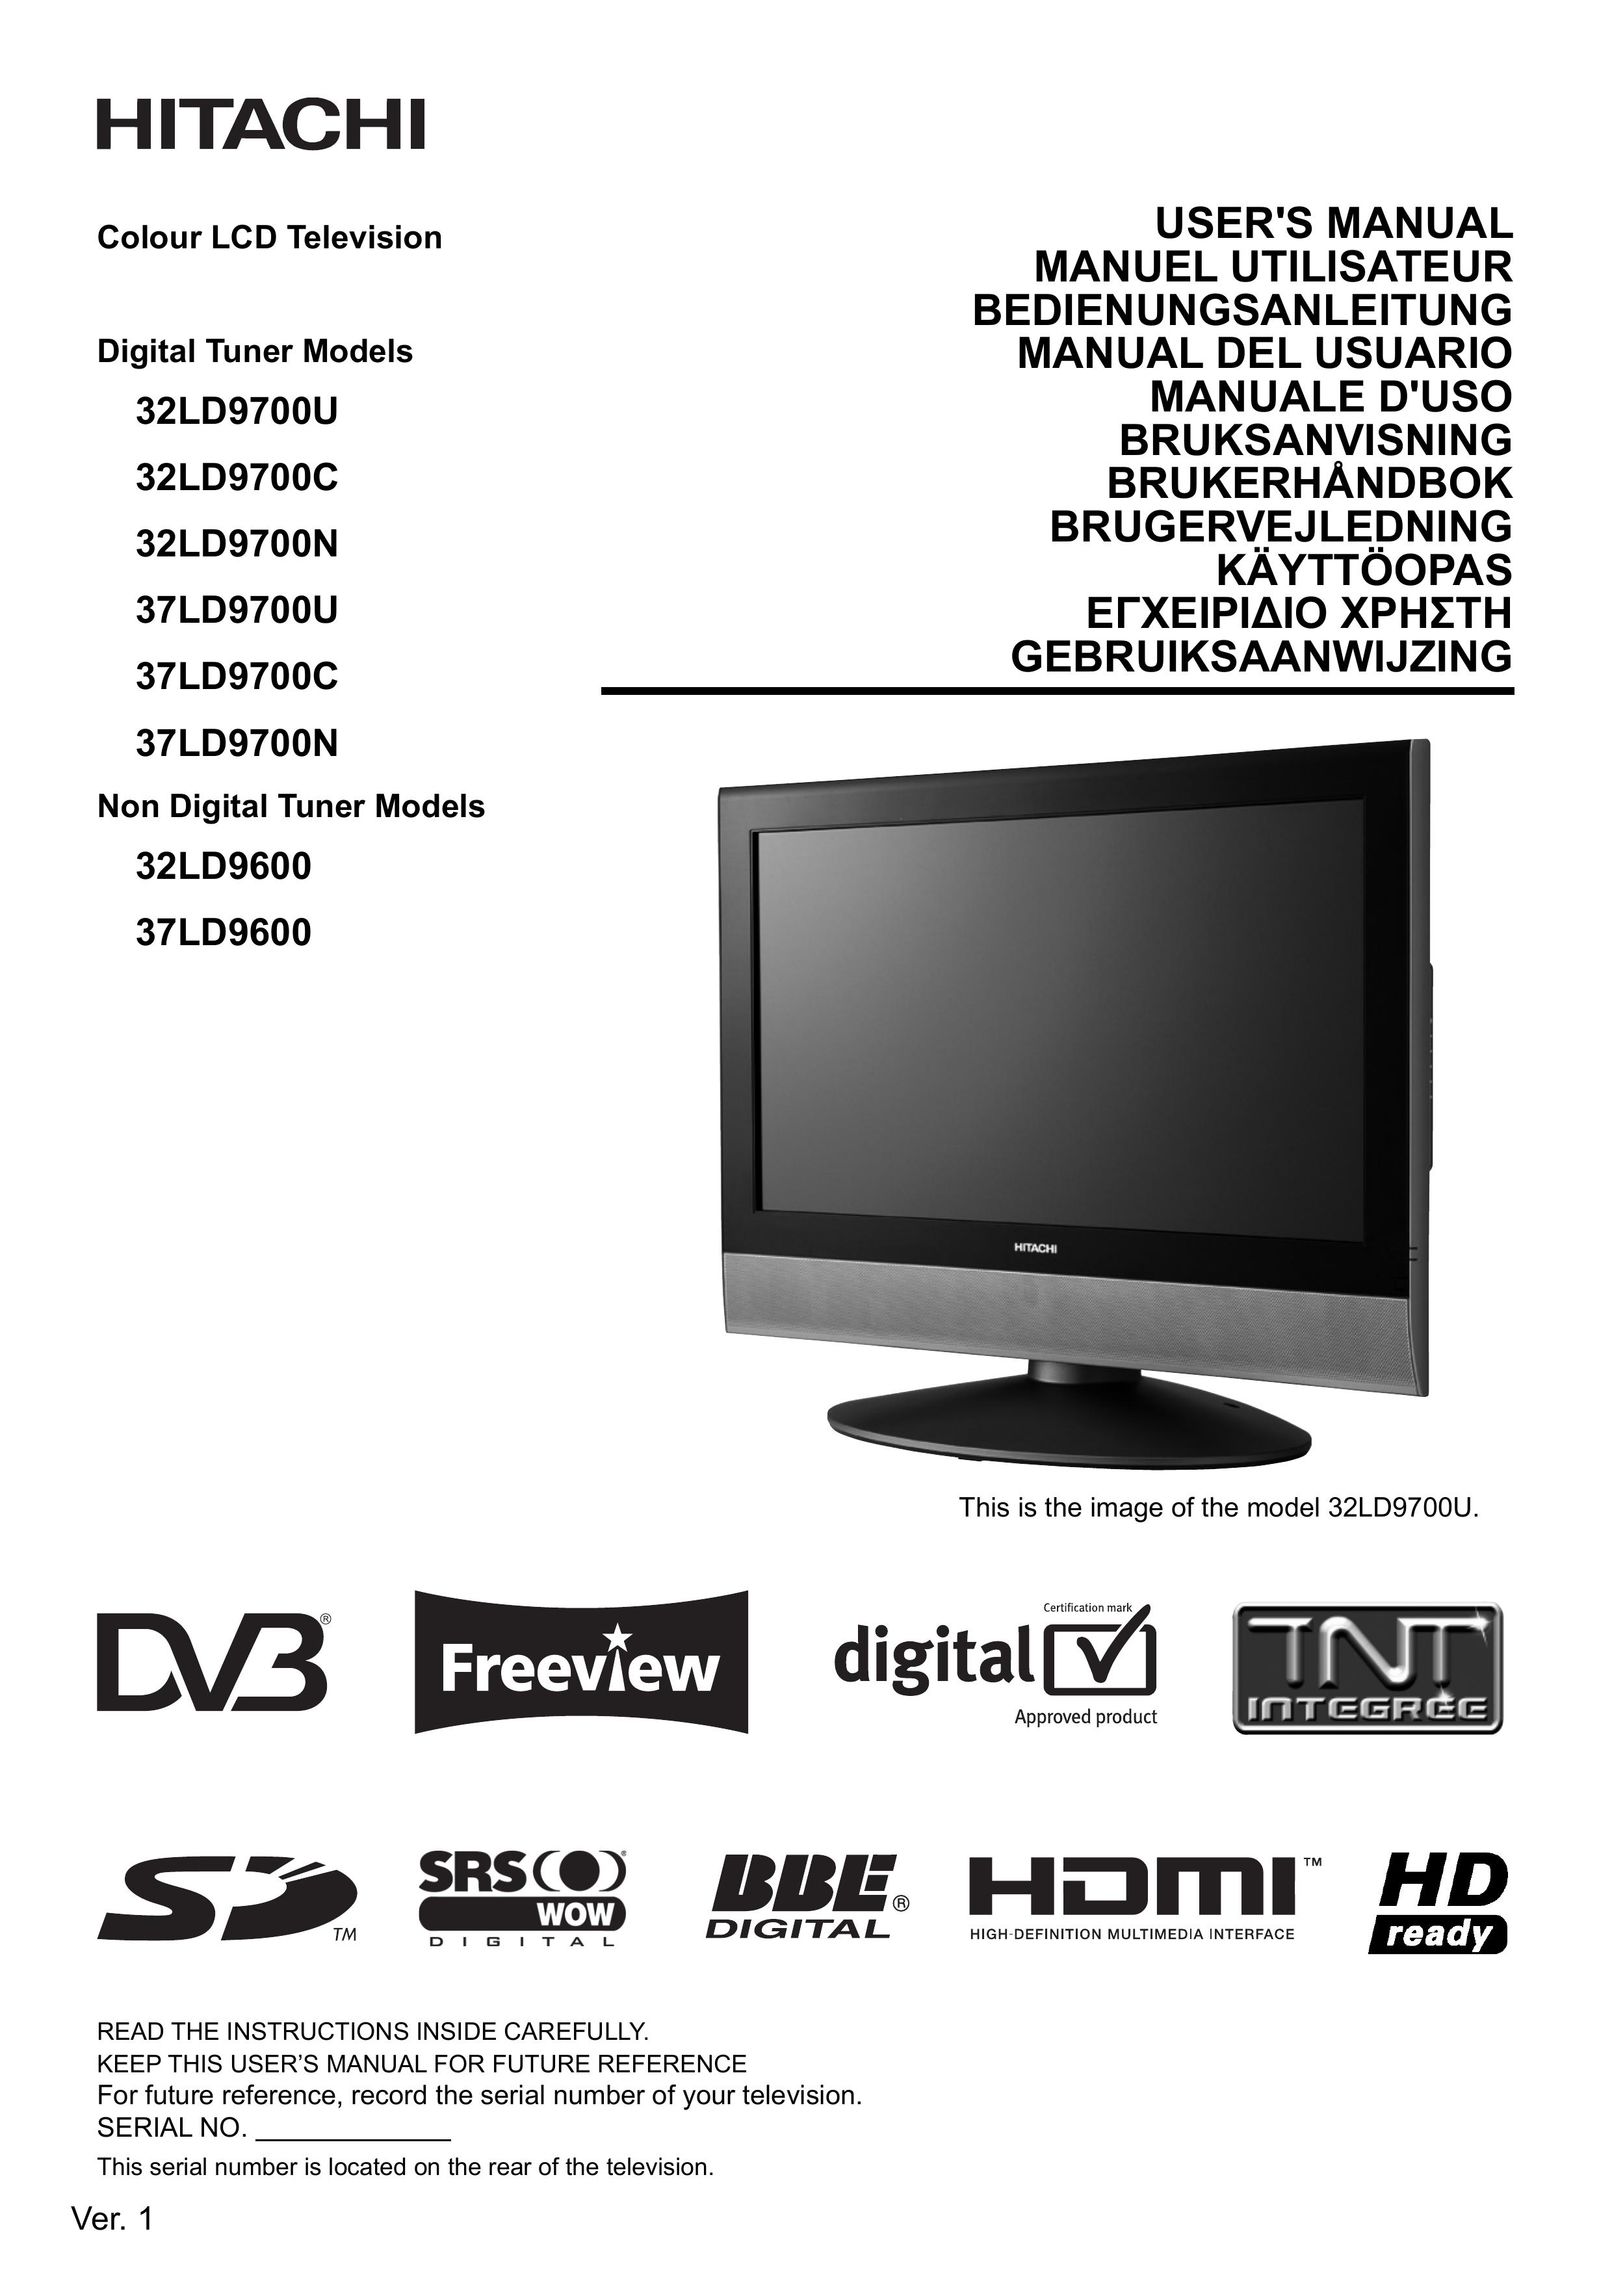 Hitachi 37LD9700U Flat Panel Television User Manual